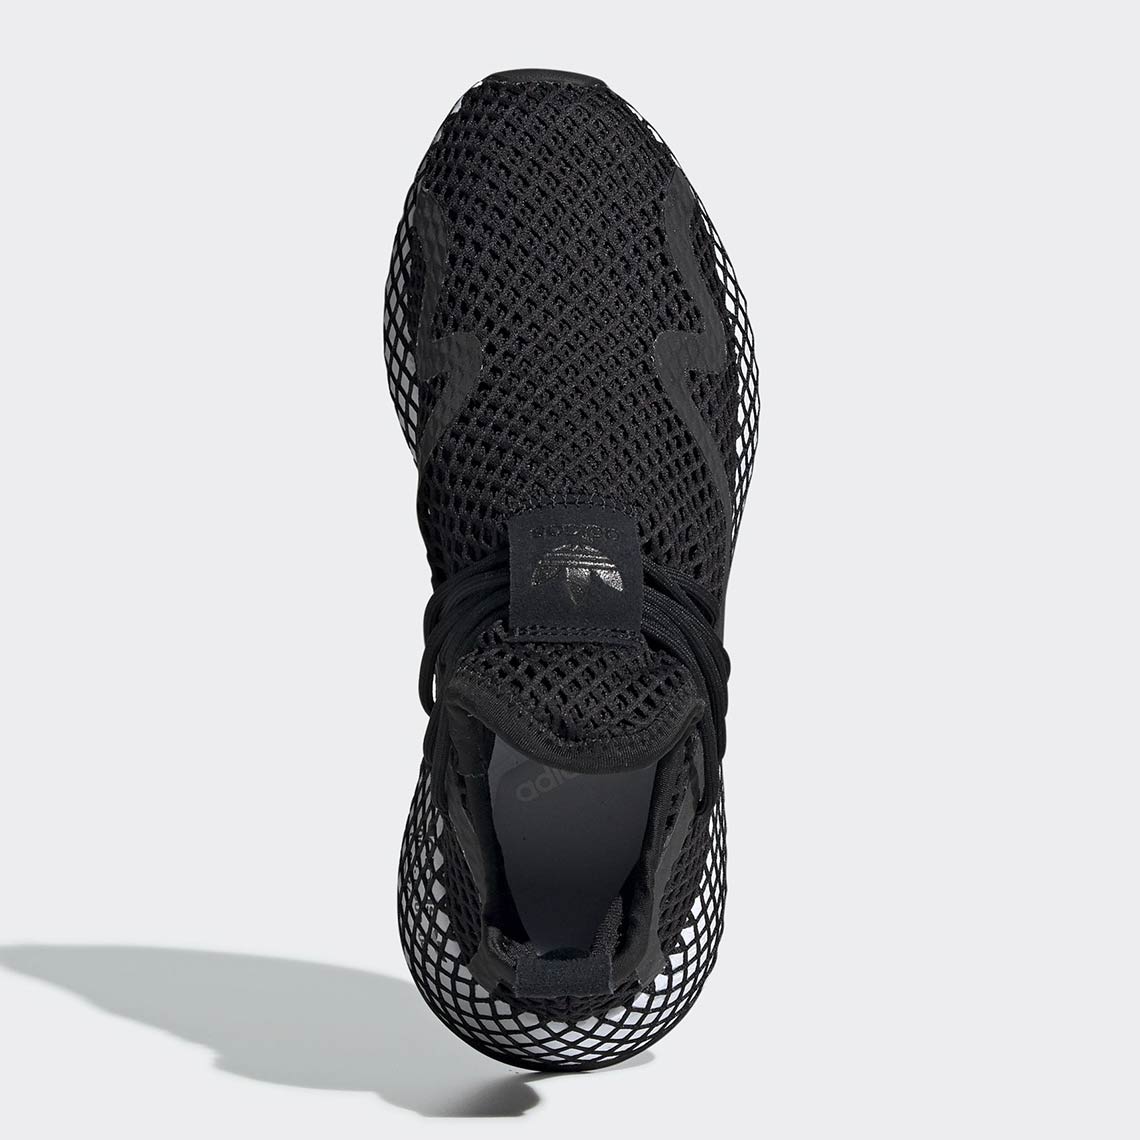 adidas Deerupt S Black White BD7879 Release Date | SneakerNews.com